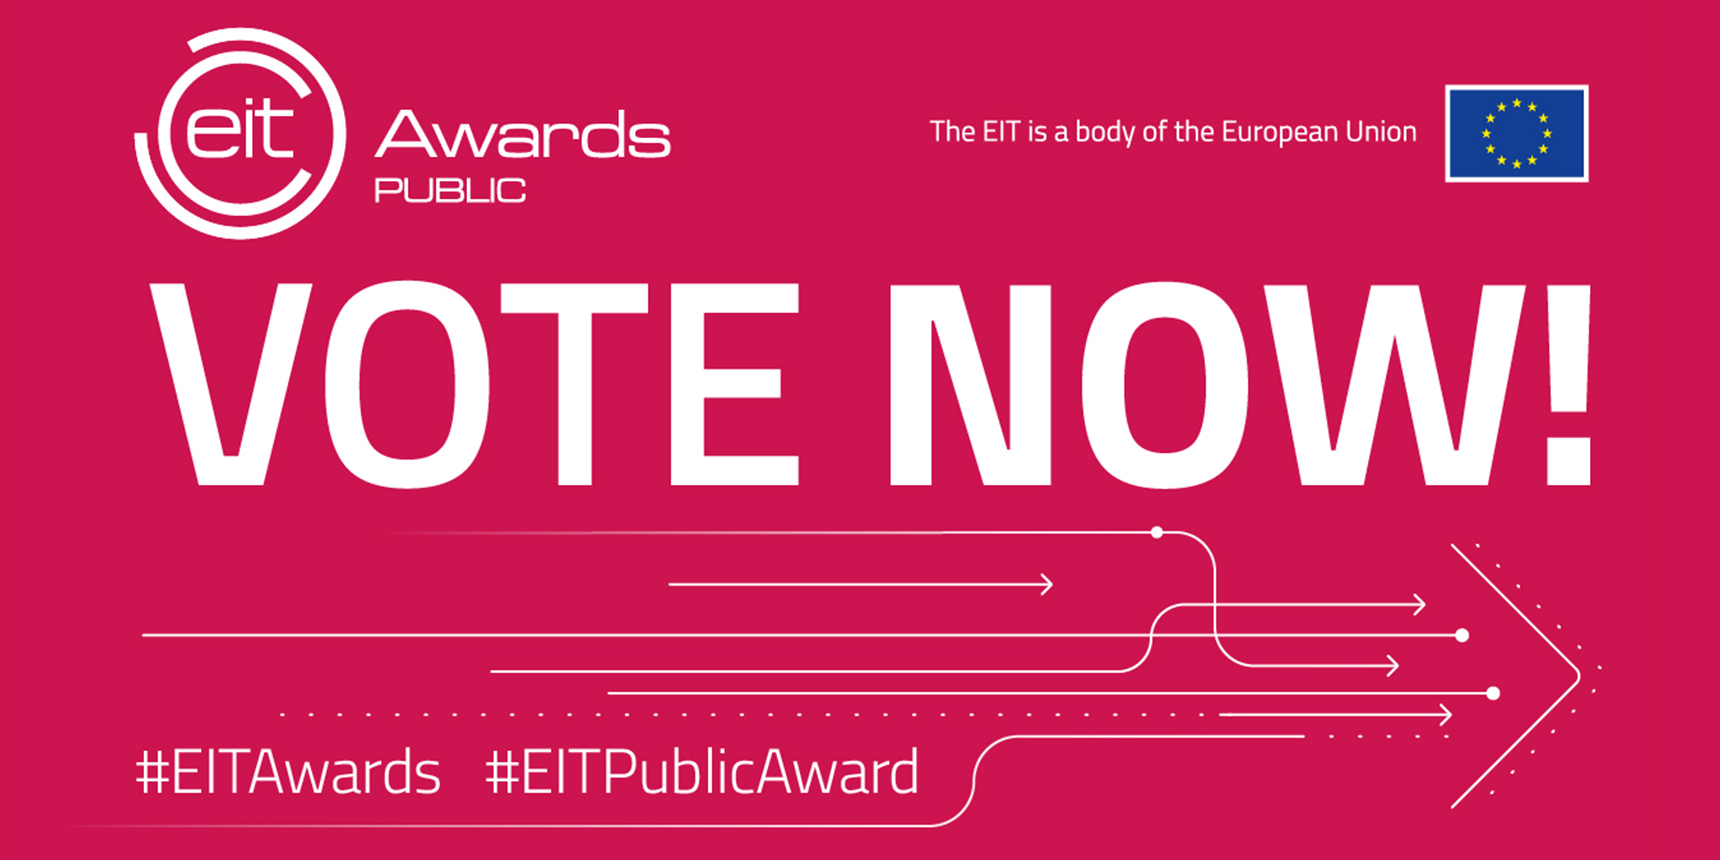 EIT Awards 2020